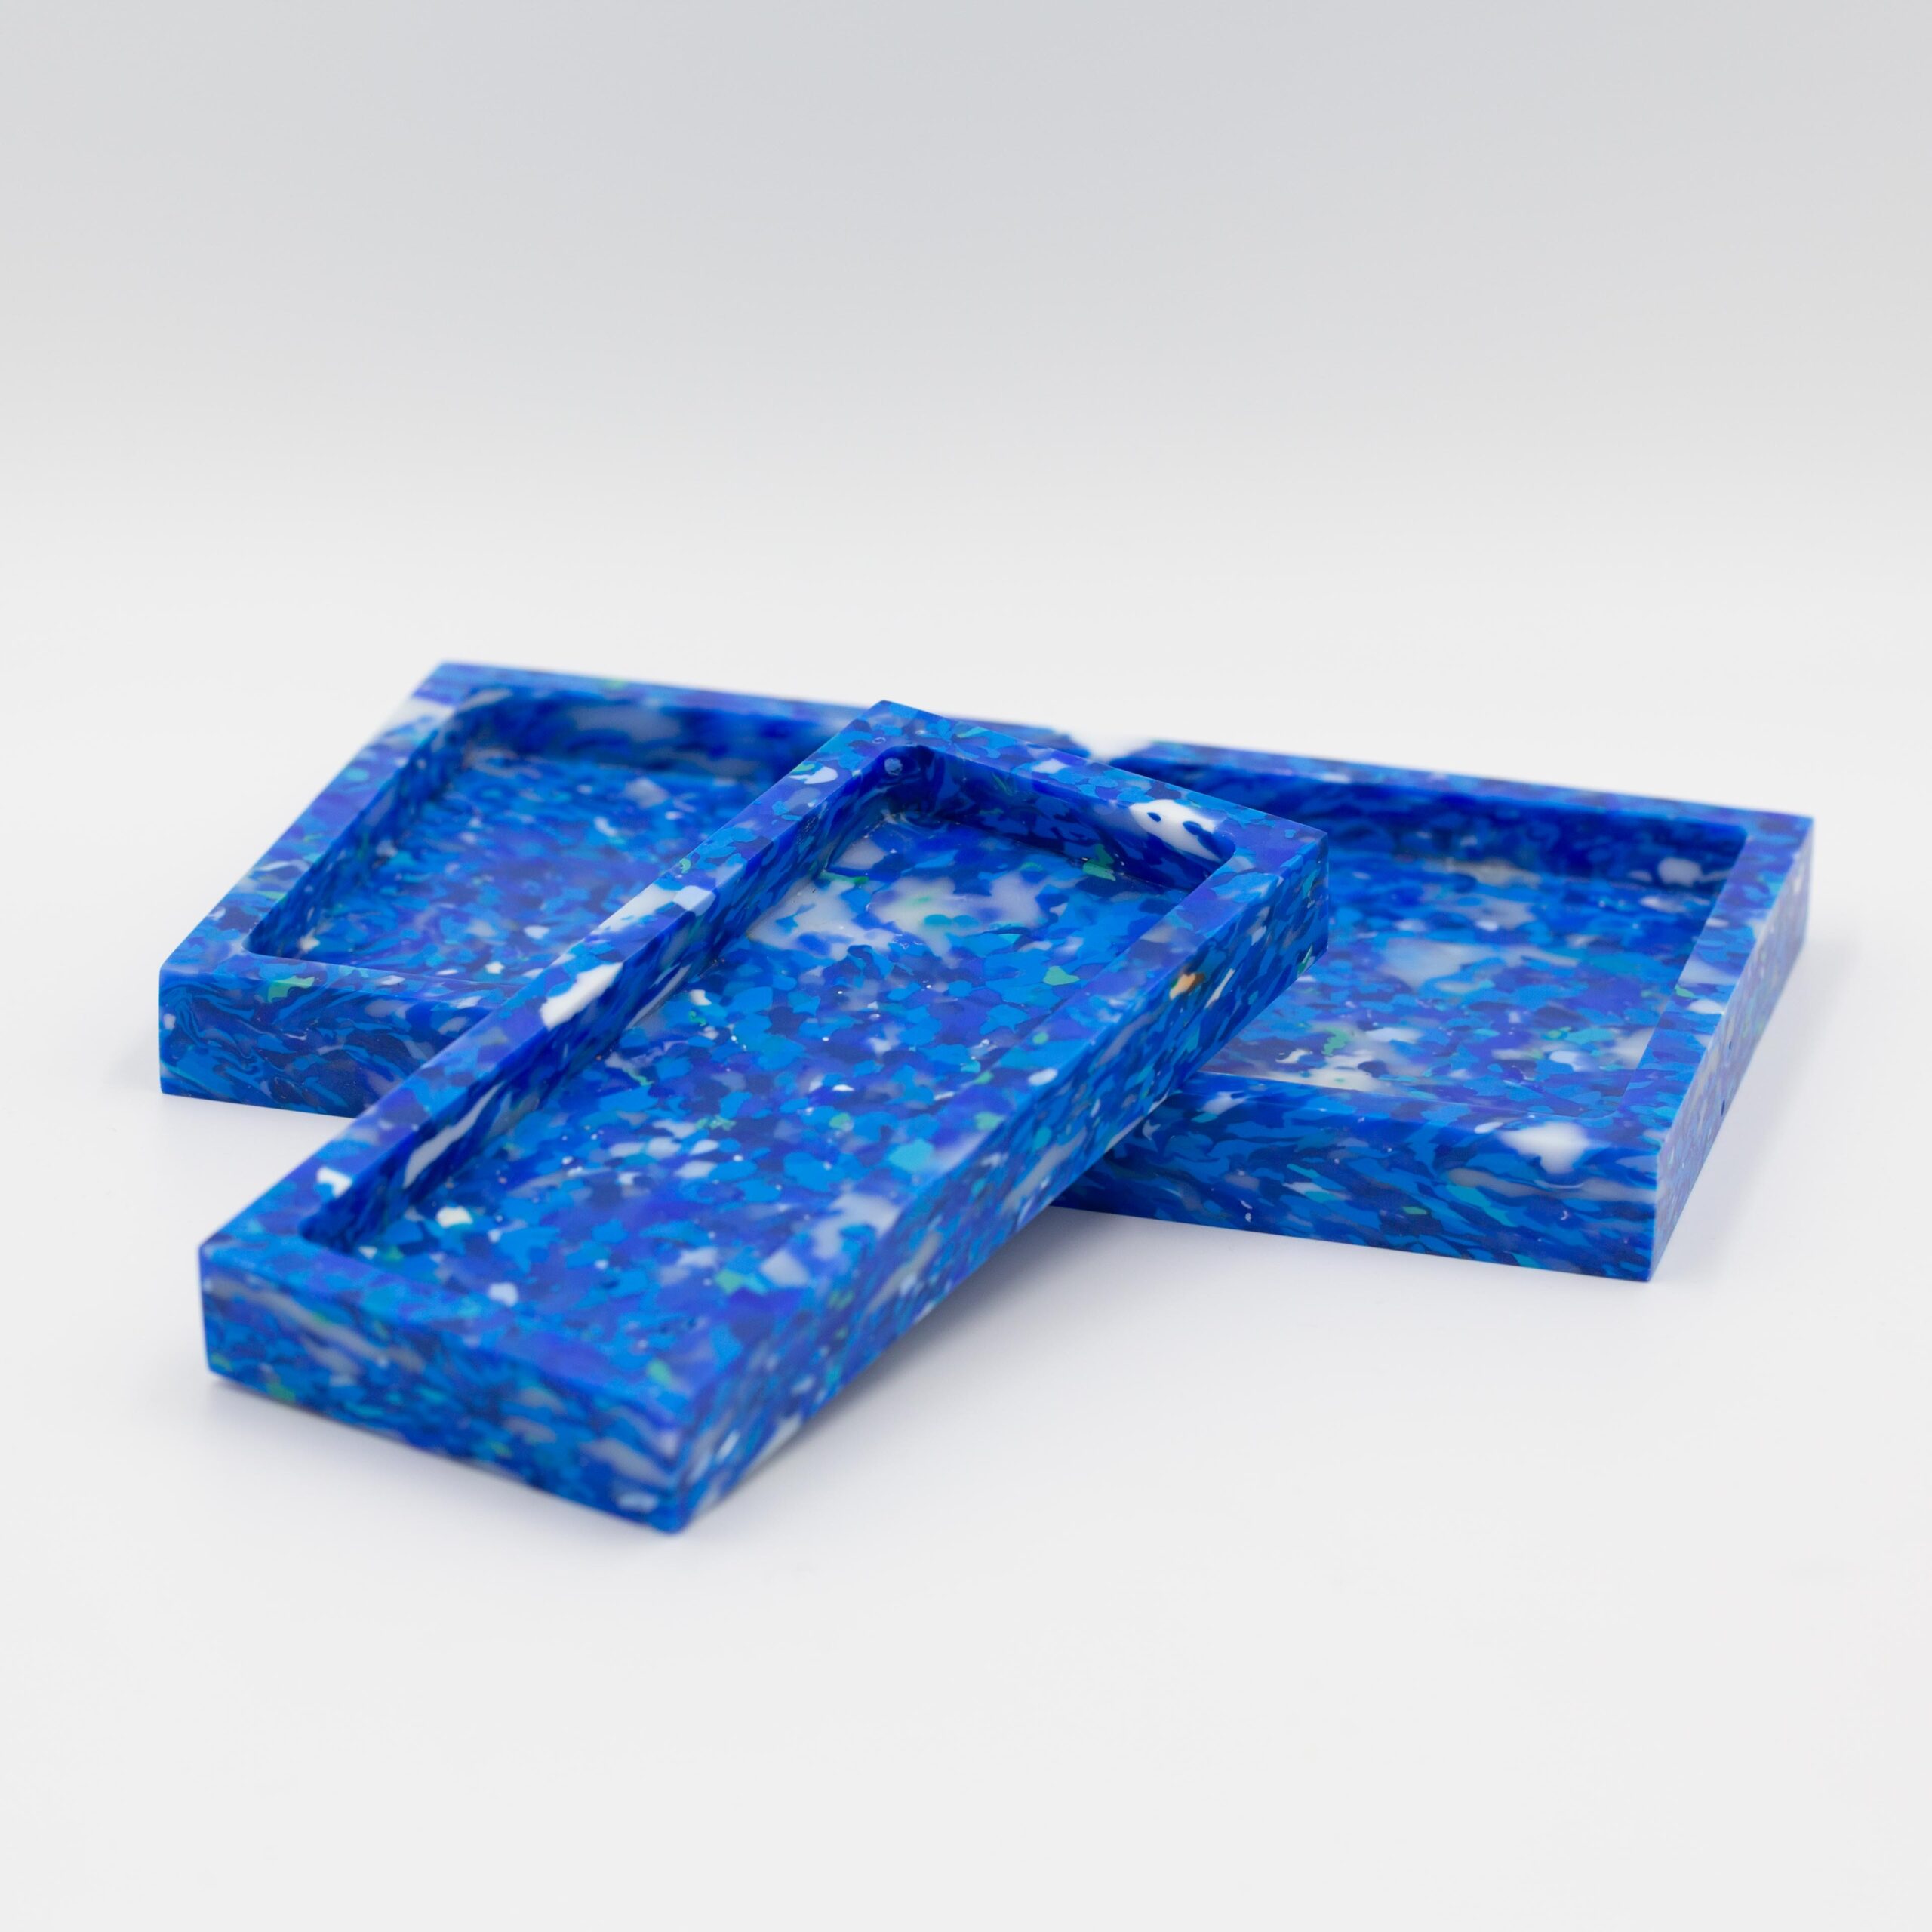 Blue Rectangular trays